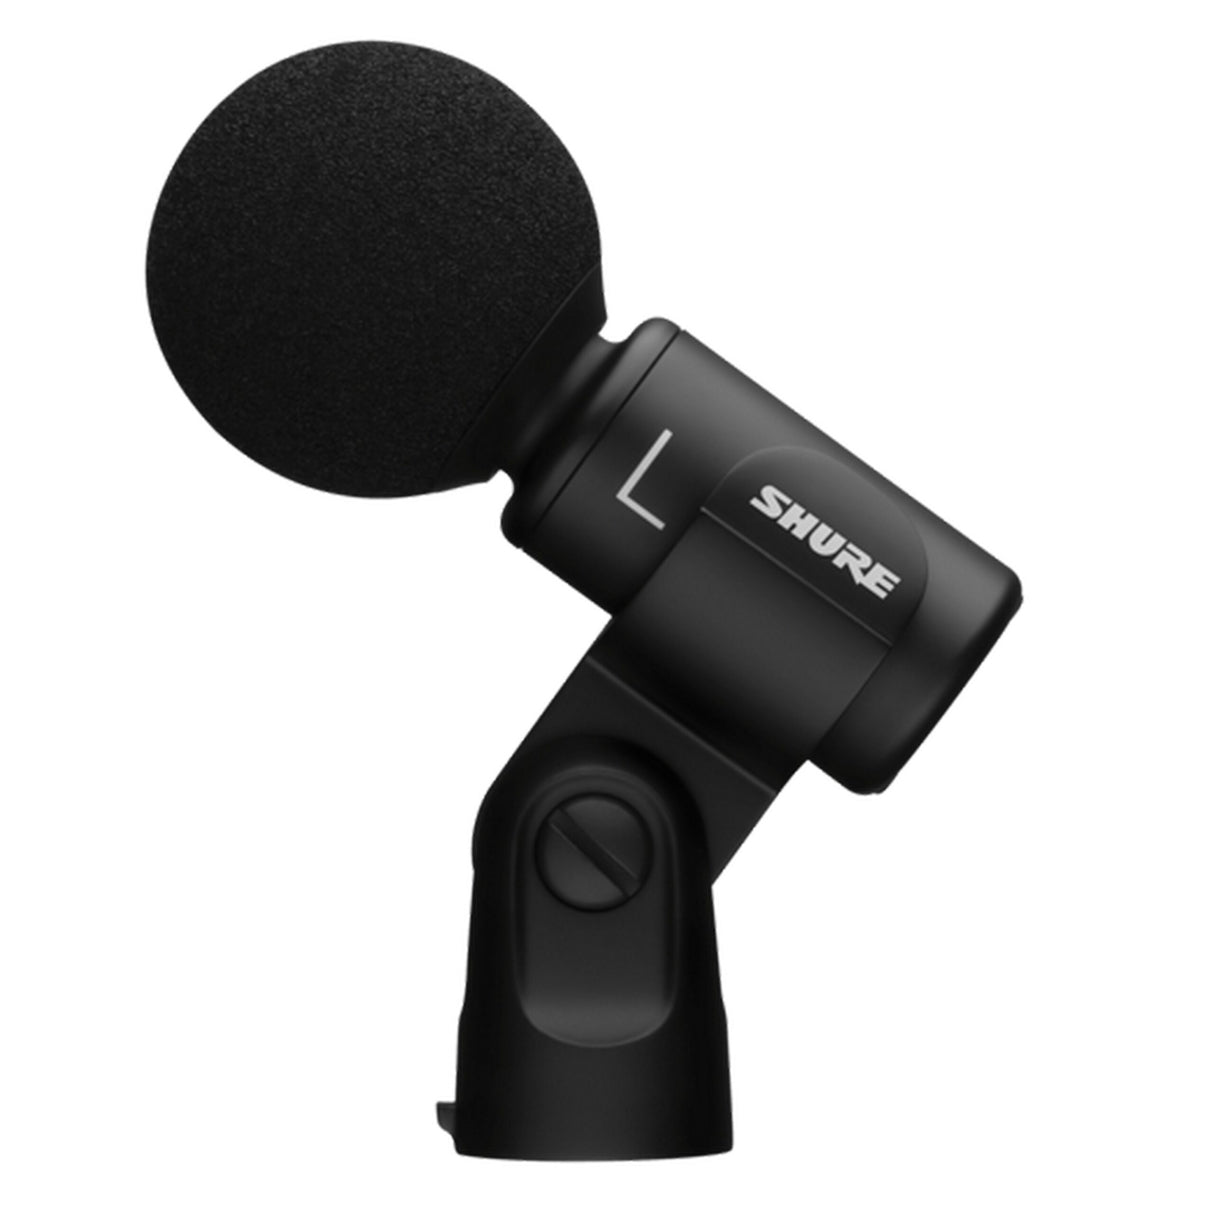 Shure MV88+ Stereo USB Digital Stereo Condenser Microphone